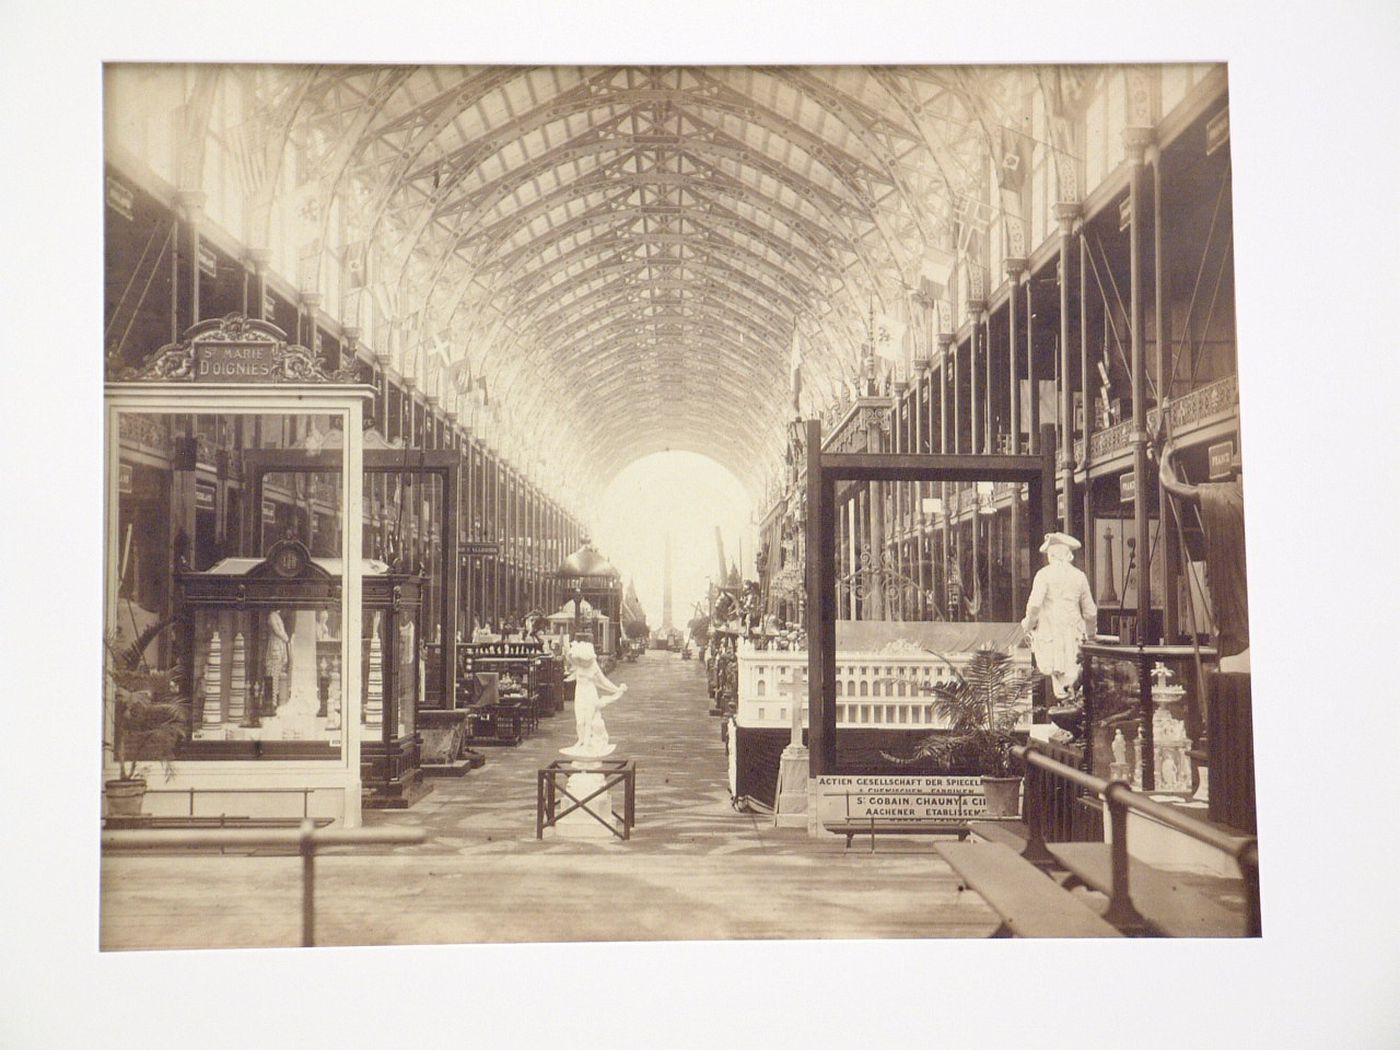 London International Exhibition (1862): Interior view of exhibition hall